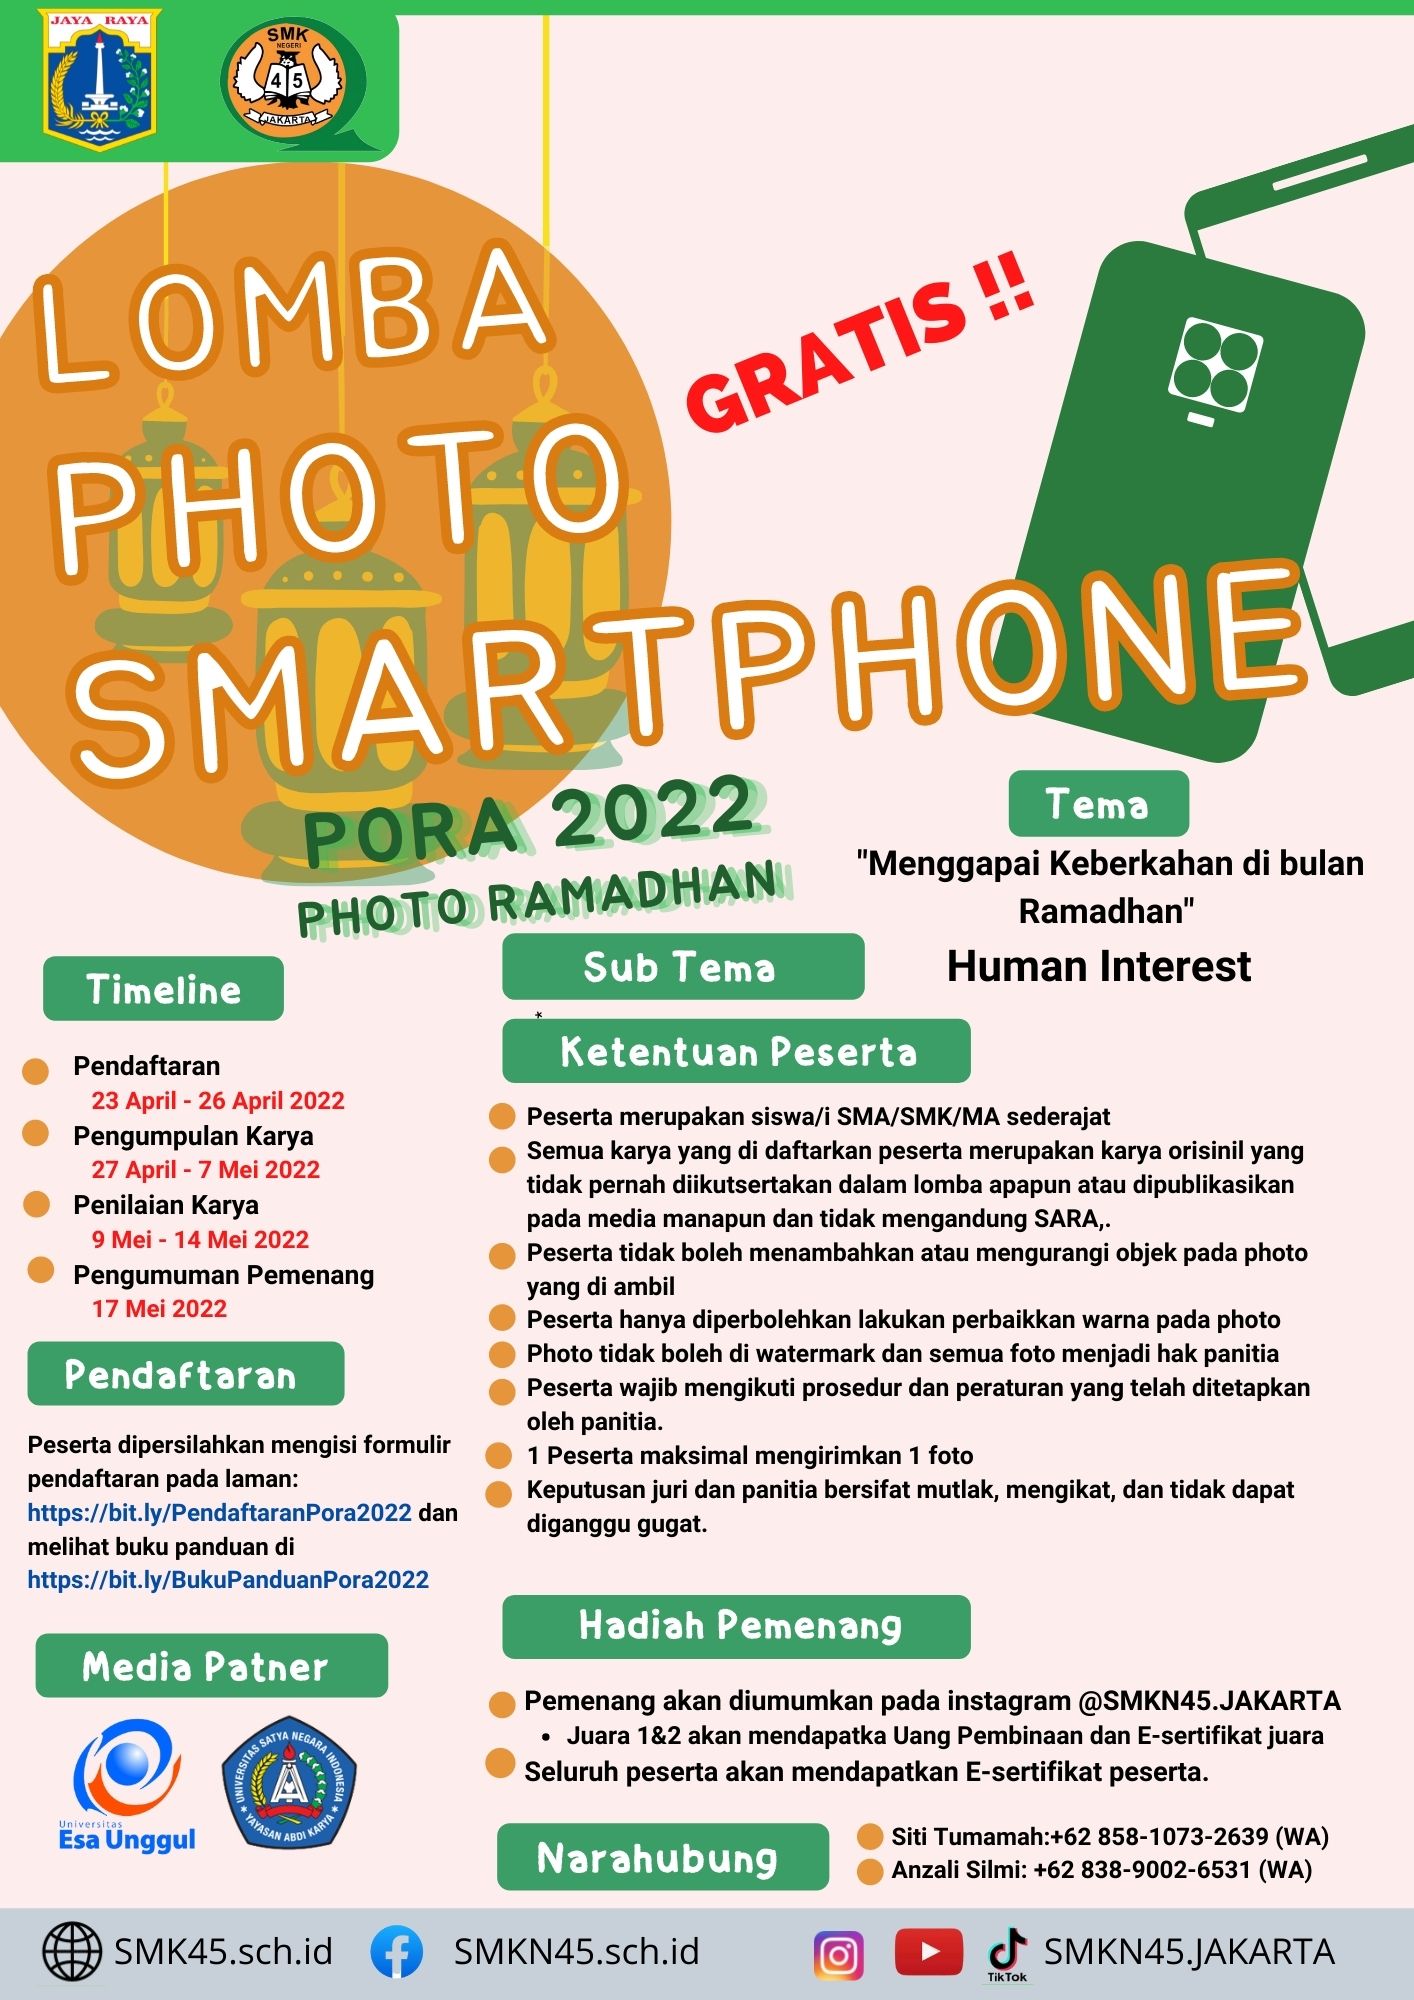 Lomba Photo Smartphone Ramadhan 2022